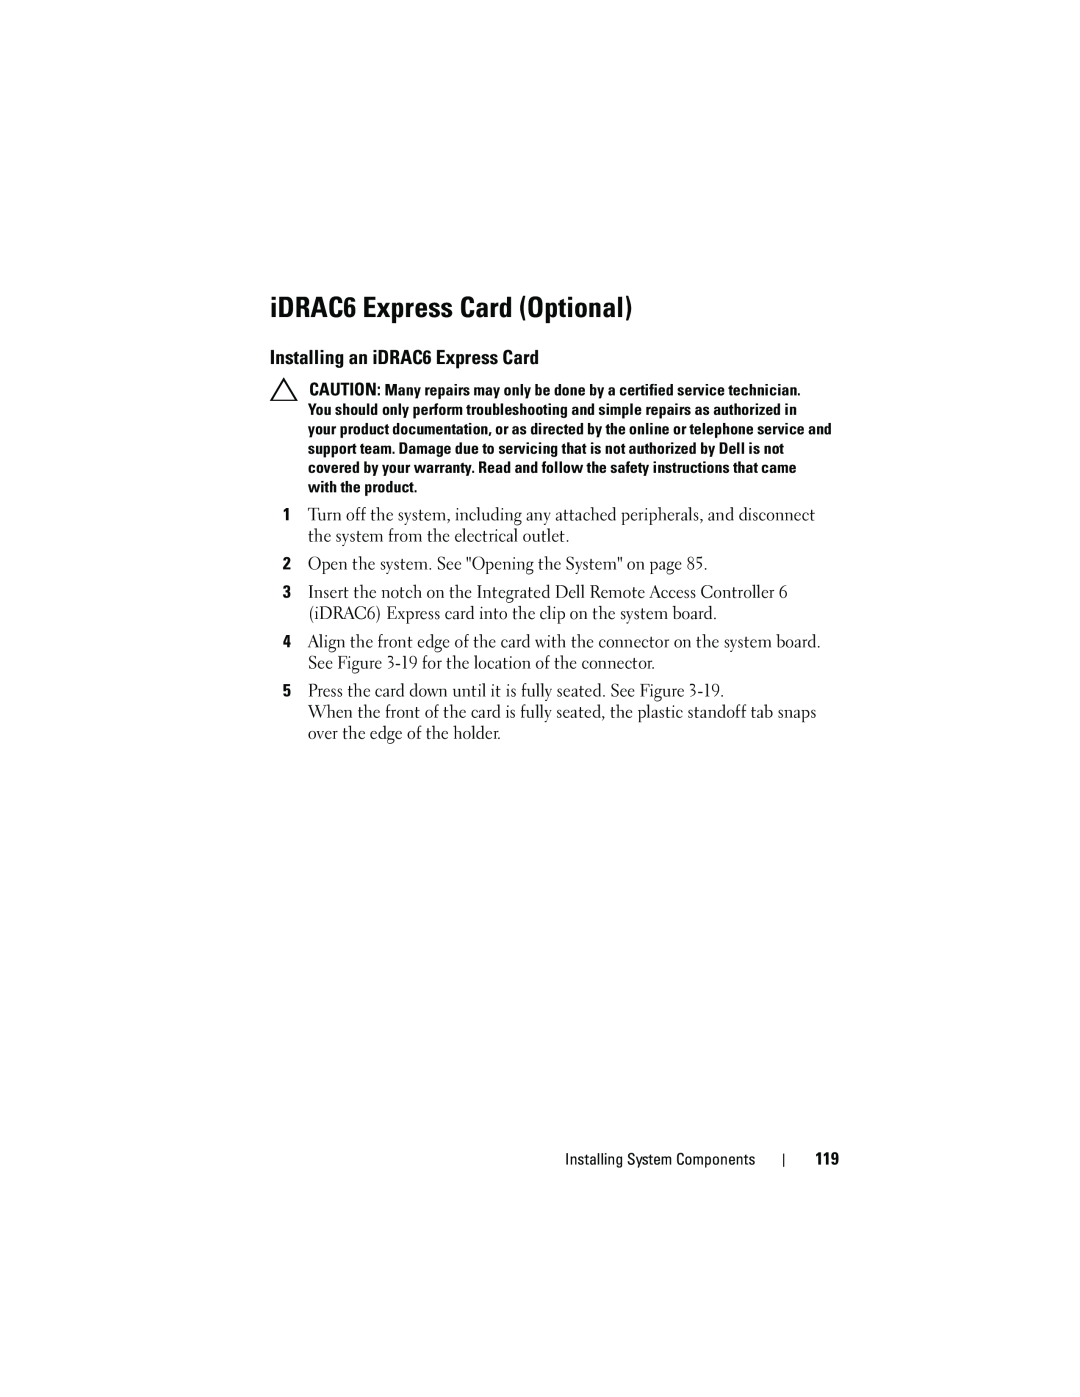 Dell T310 owner manual iDRAC6 Express Card Optional, Installing an iDRAC6 Express Card 